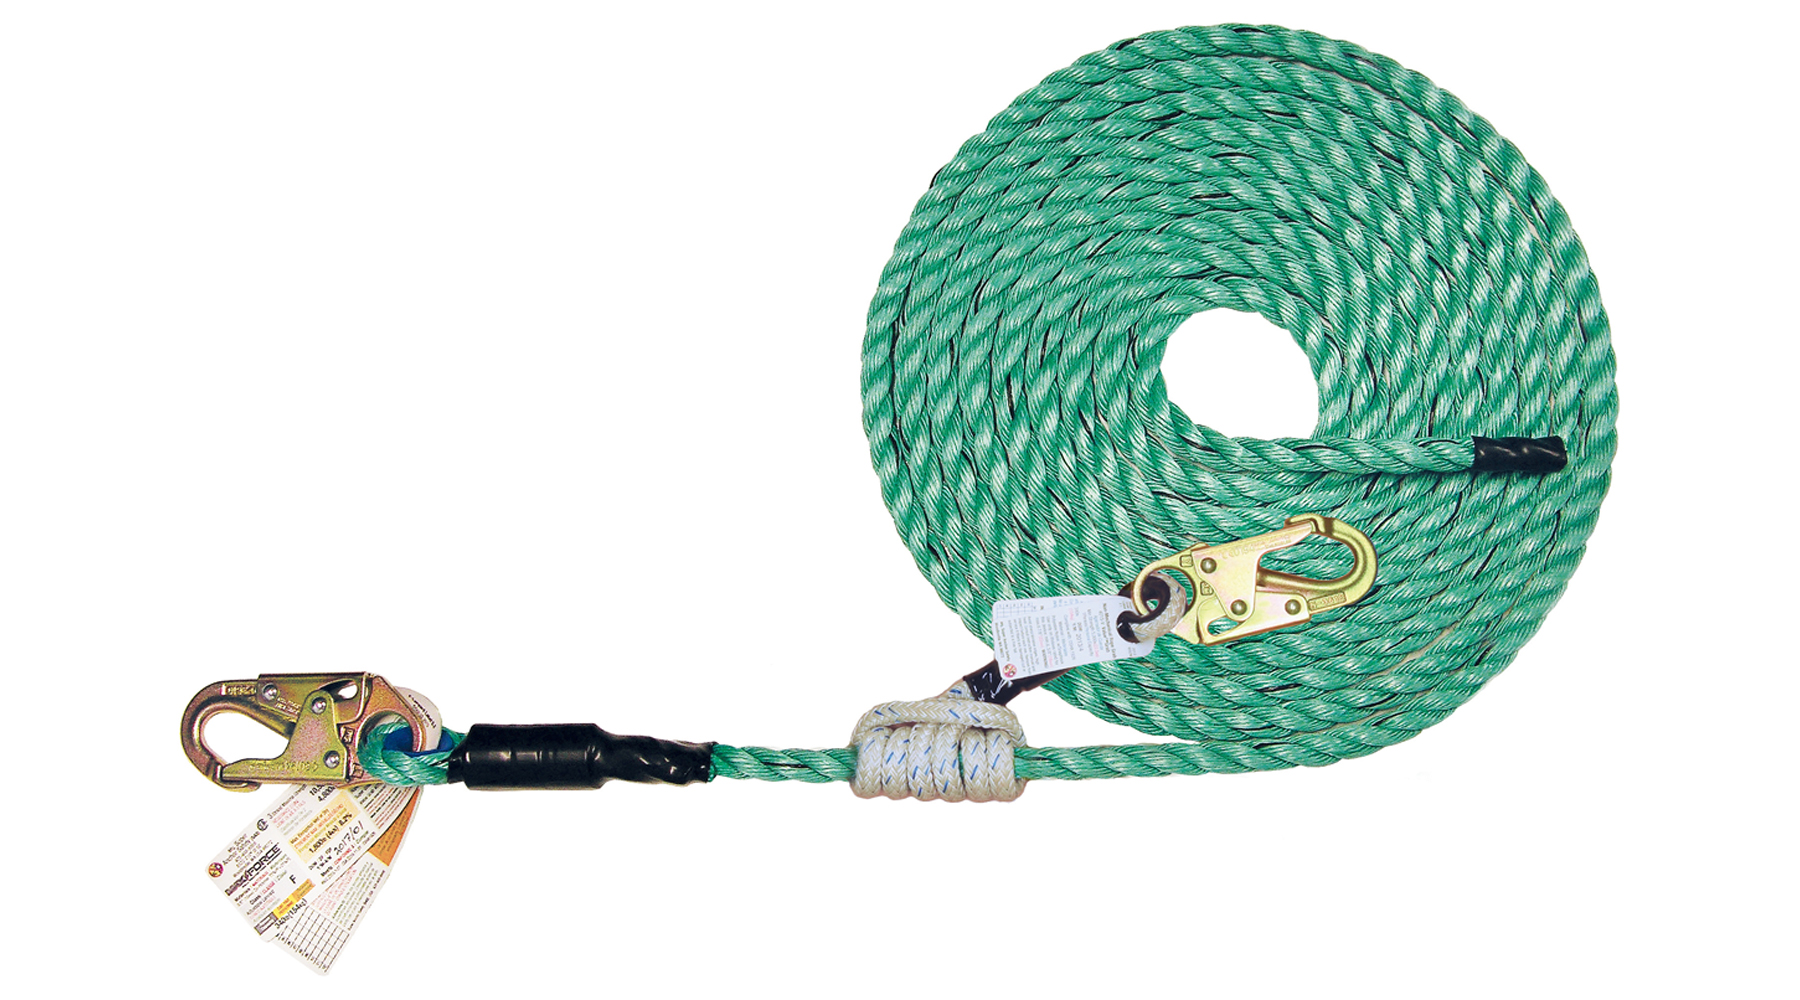 Maxima Lifeline - Value Rope Grab Options